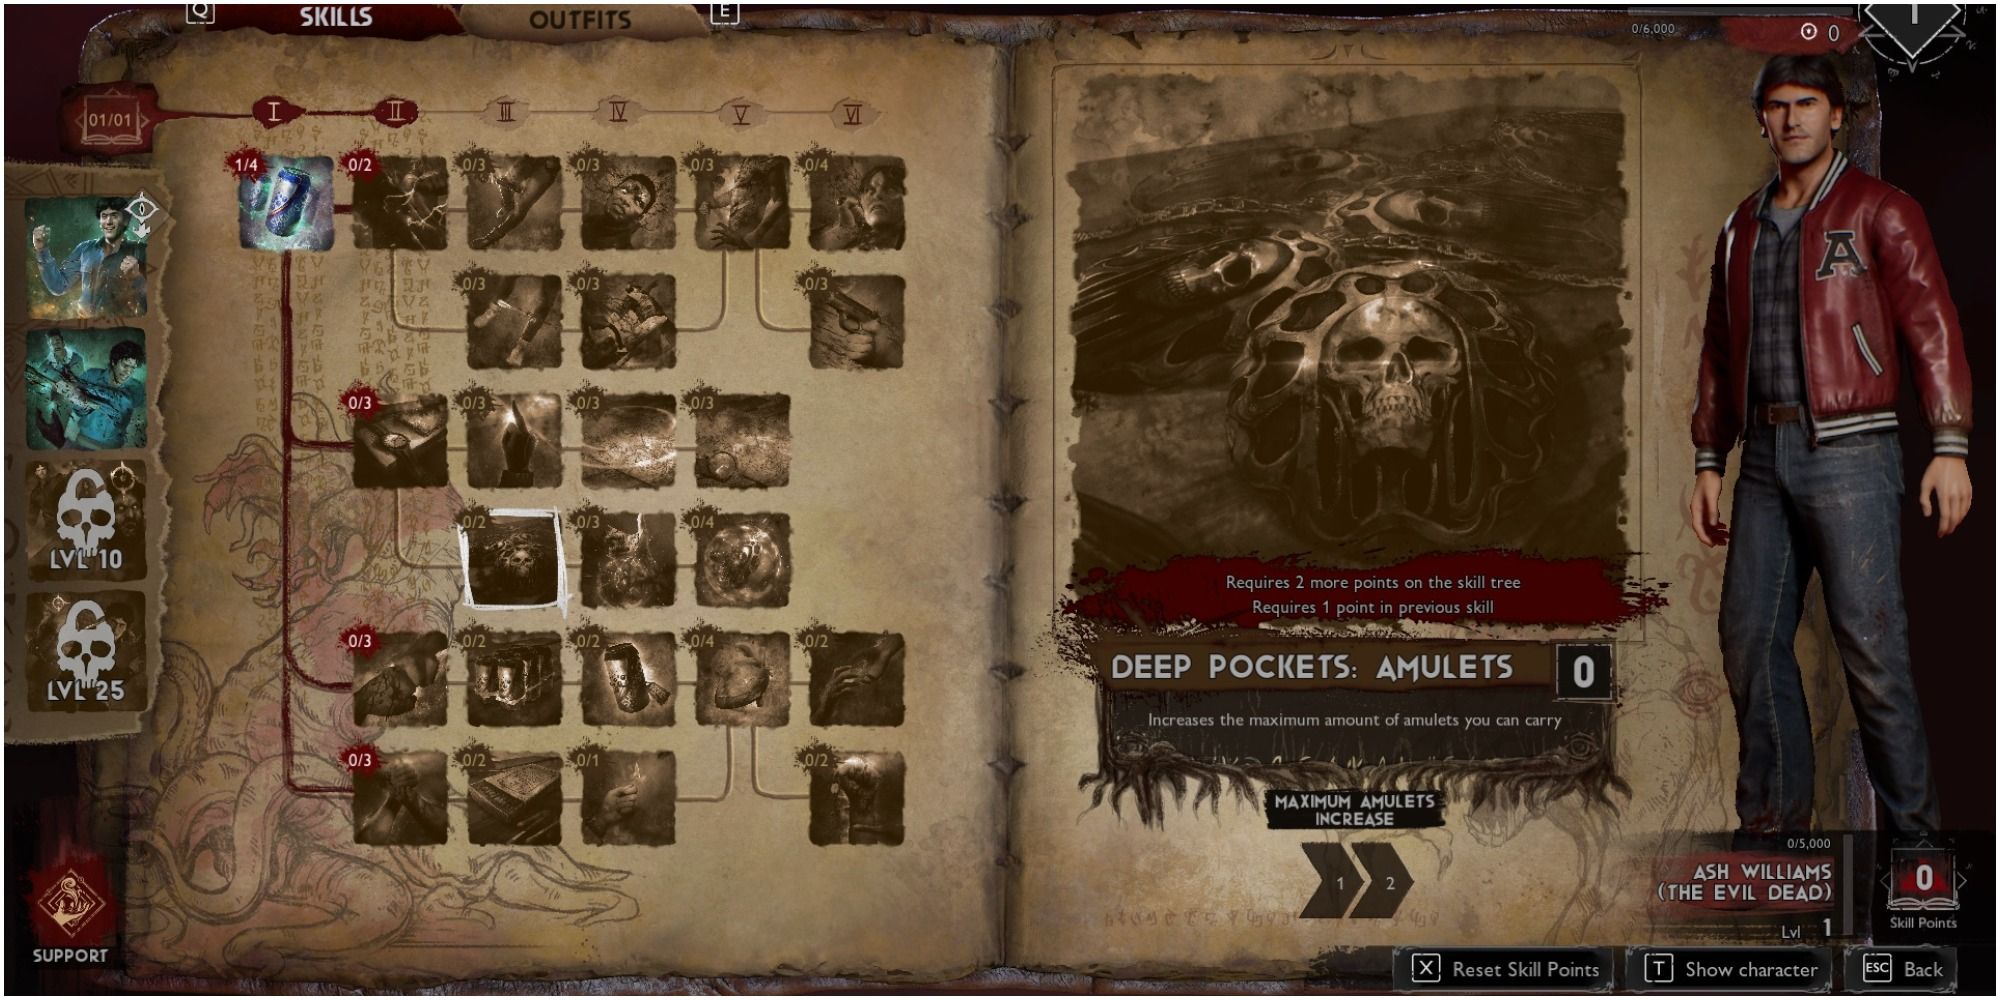 Evil Dead The Game Support Skill Deep Pockets Amulets Description